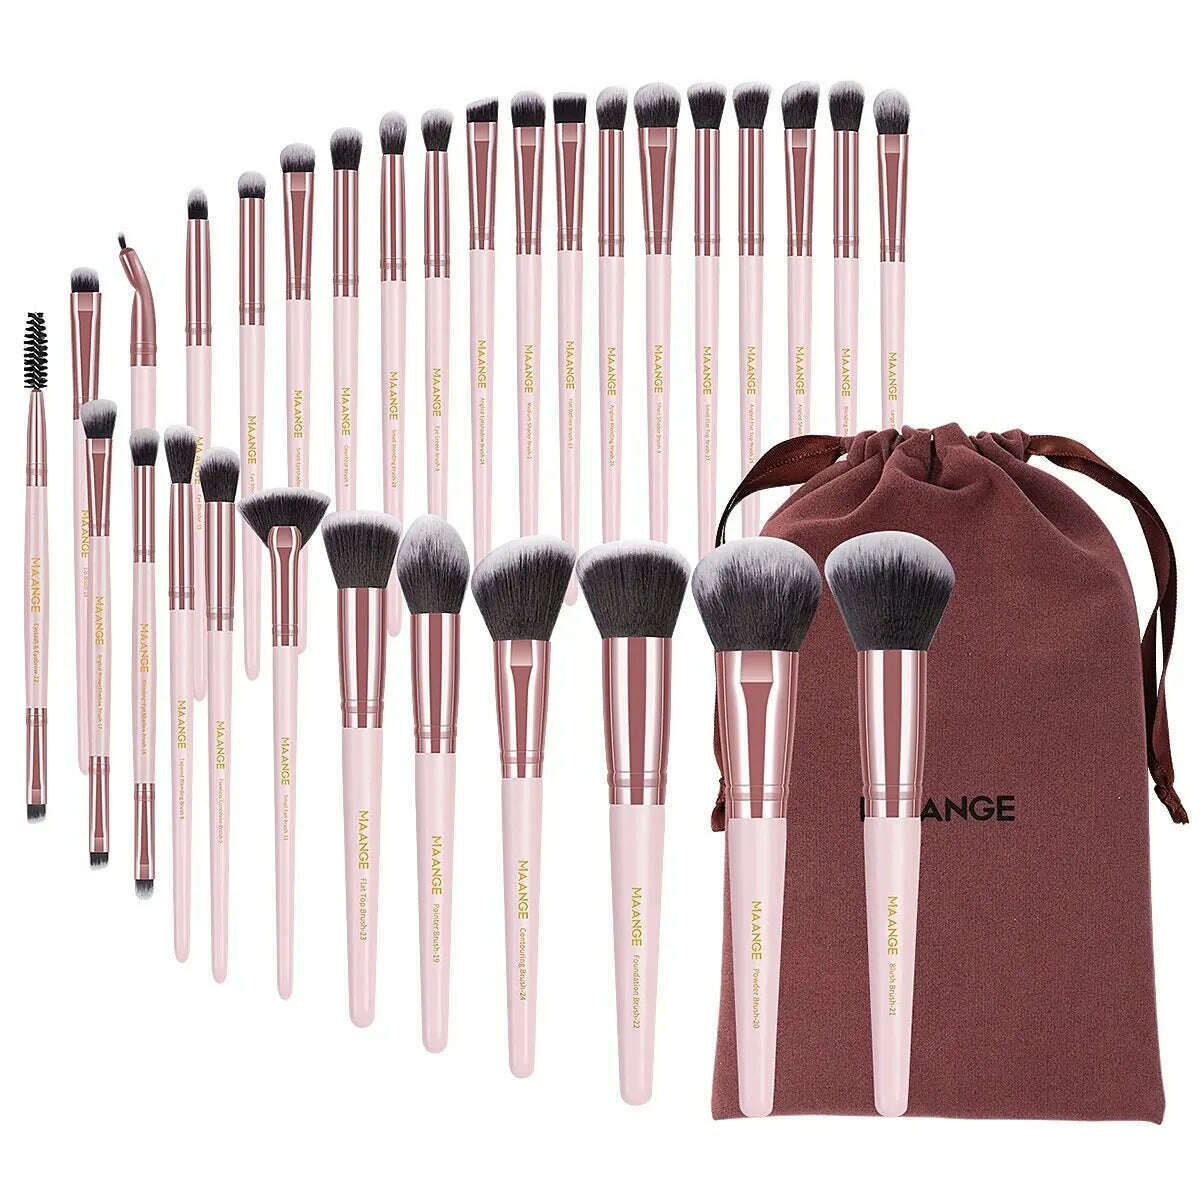 KIMLUD, MAANGE 30pcs Professional Makeup Brush Set Foundation Concealers Eye Shadows Powder Blush Blending Brushes Beauty Tools with Bag, Pink Gold, KIMLUD Women's Clothes